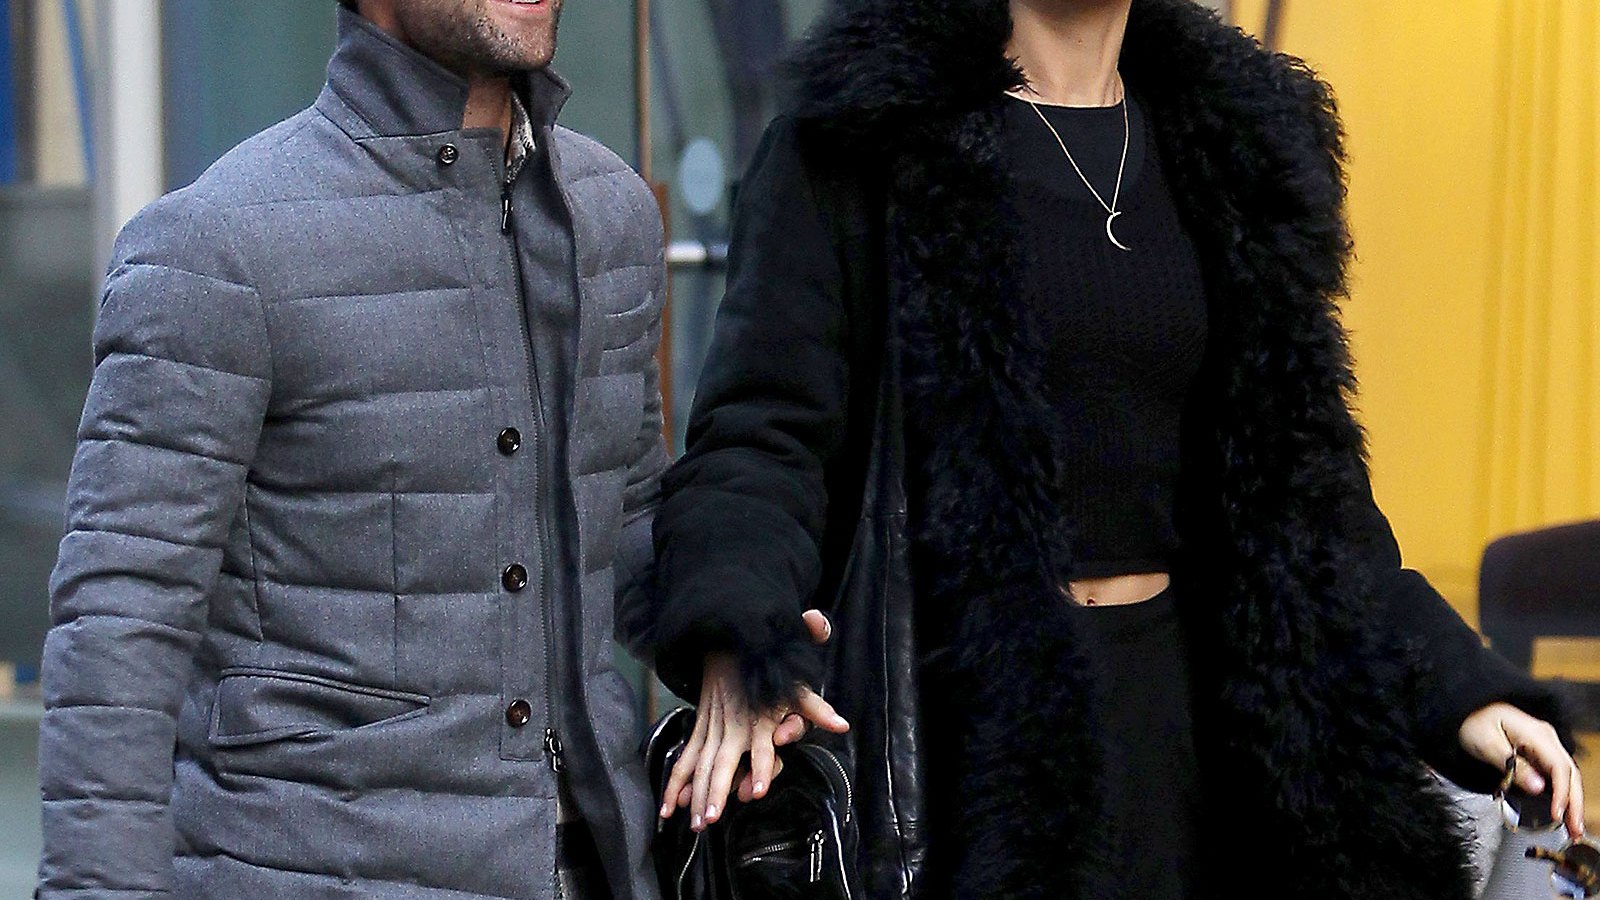 Adam Levine and Behati Prinsloo in New York on Nov 14, 2013